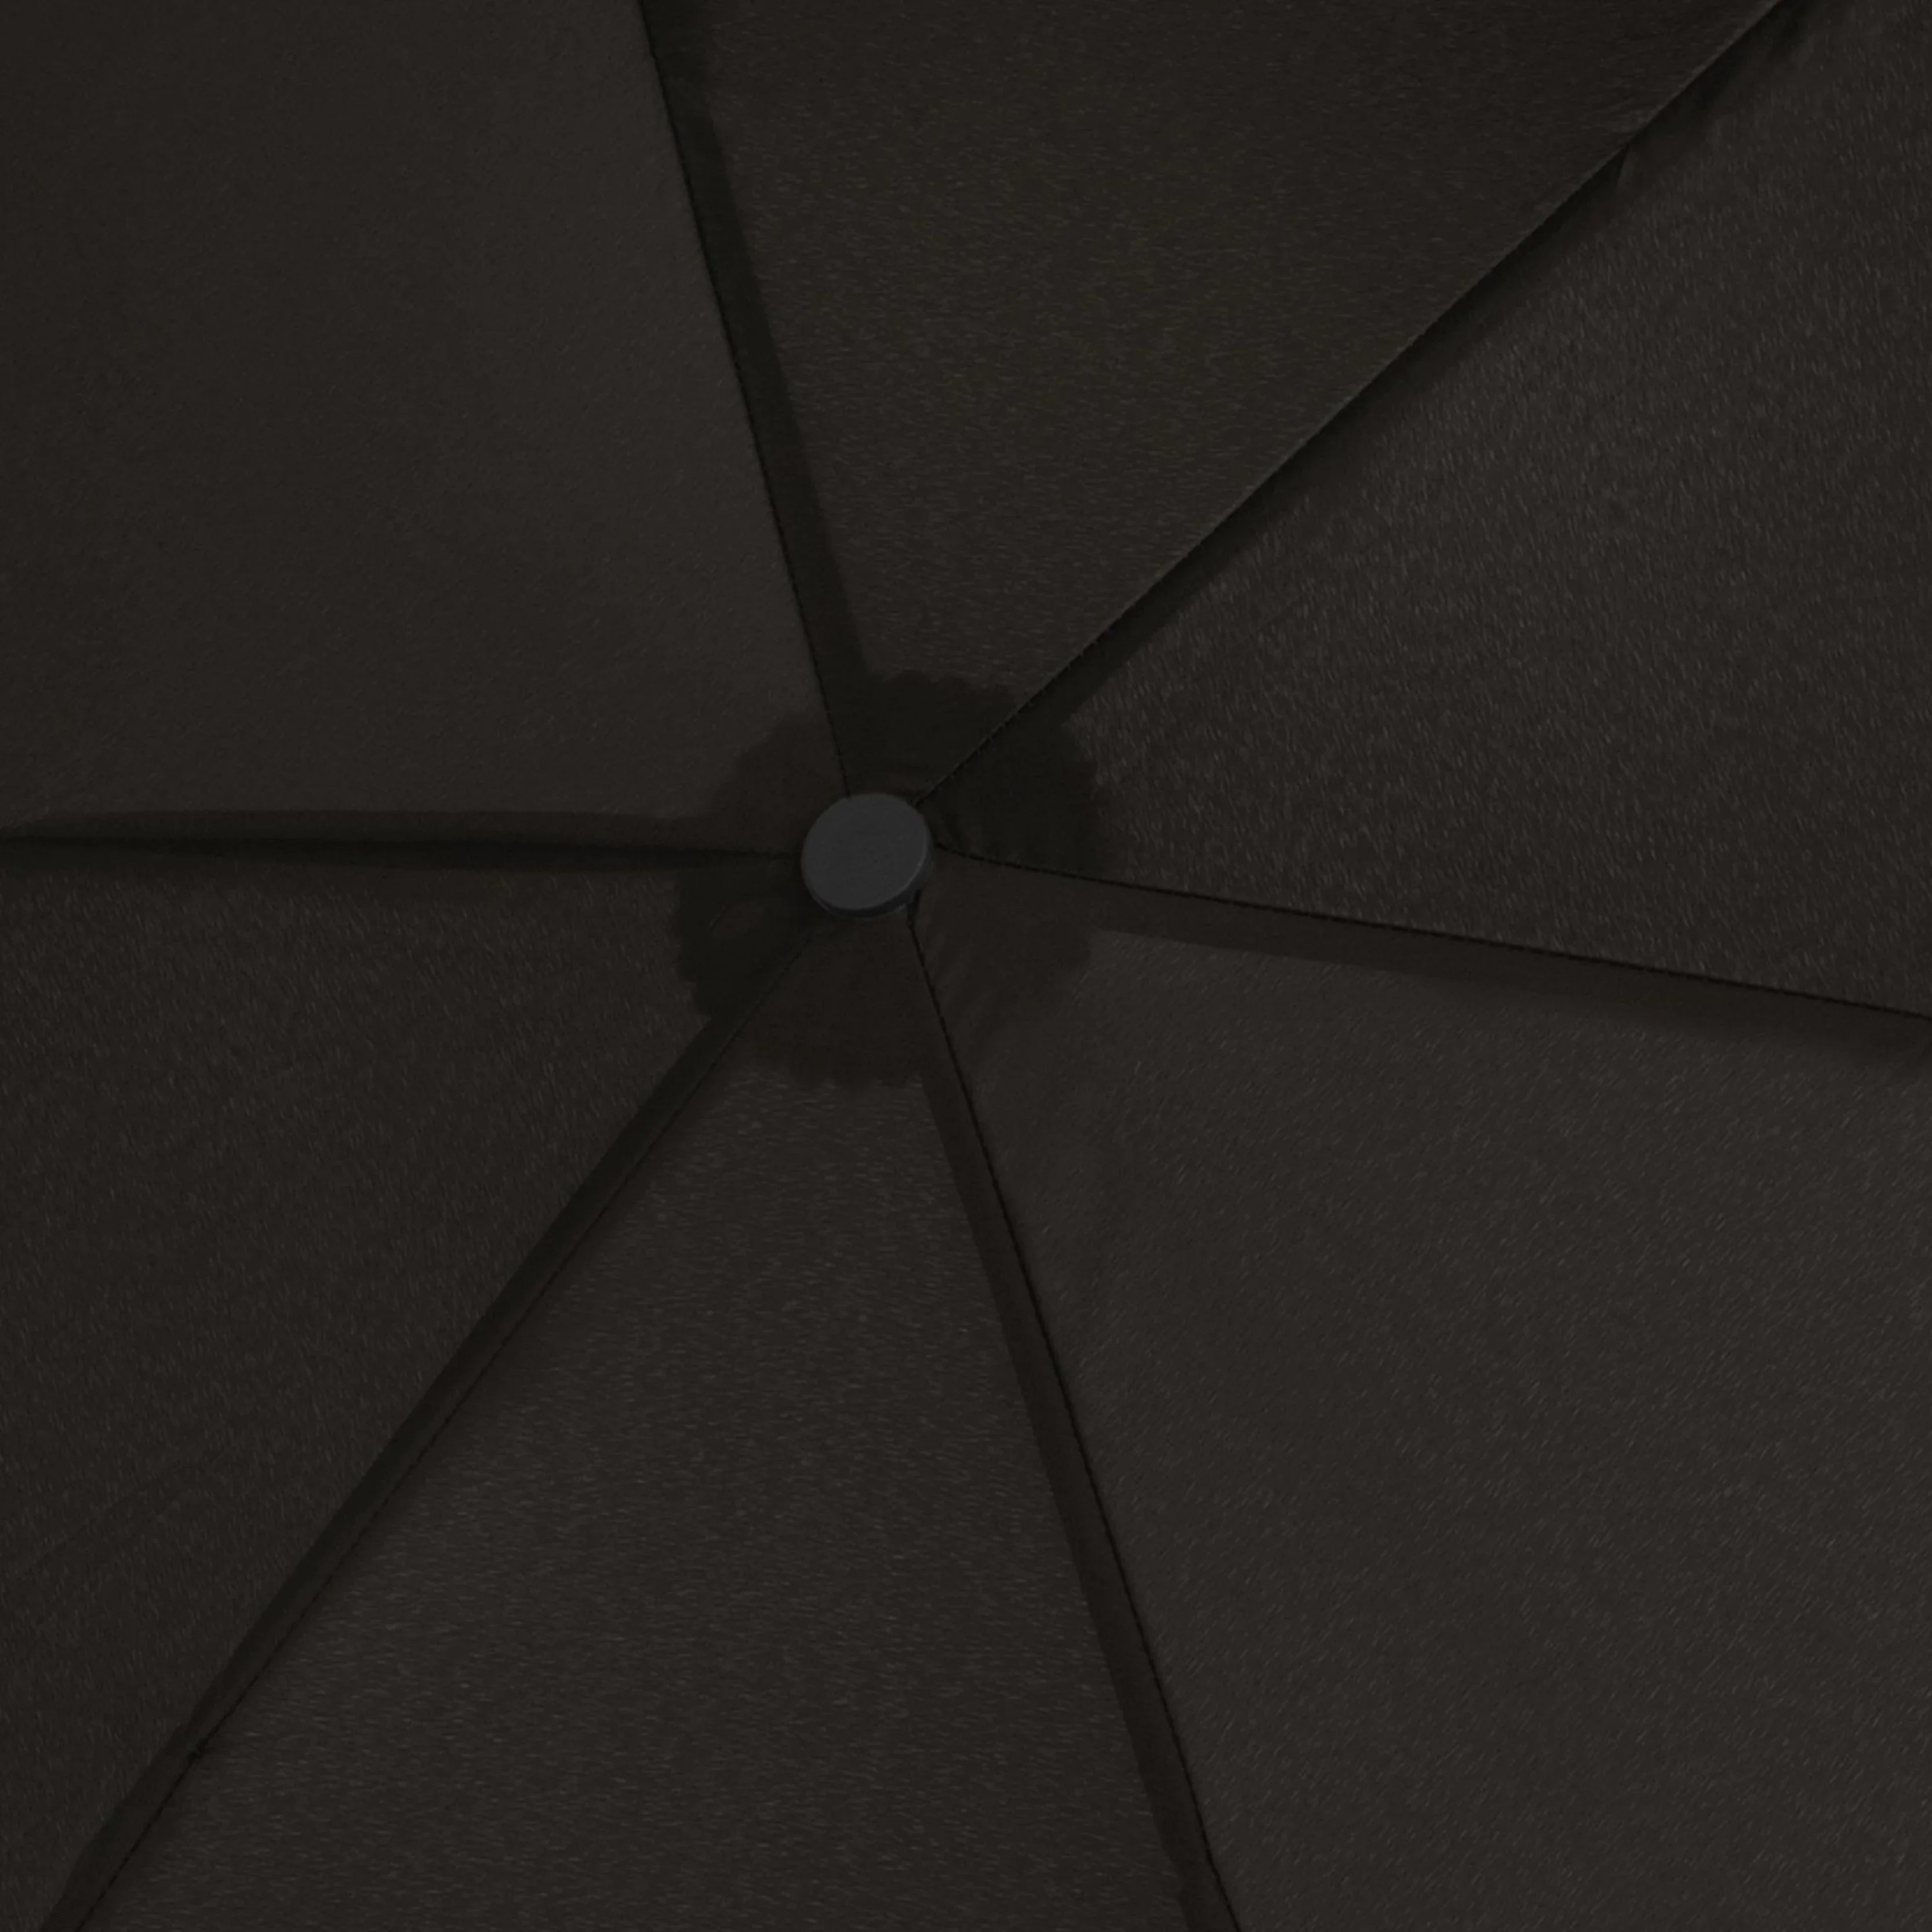 Parapluies pliants Doppler Zero Magic - uni noir